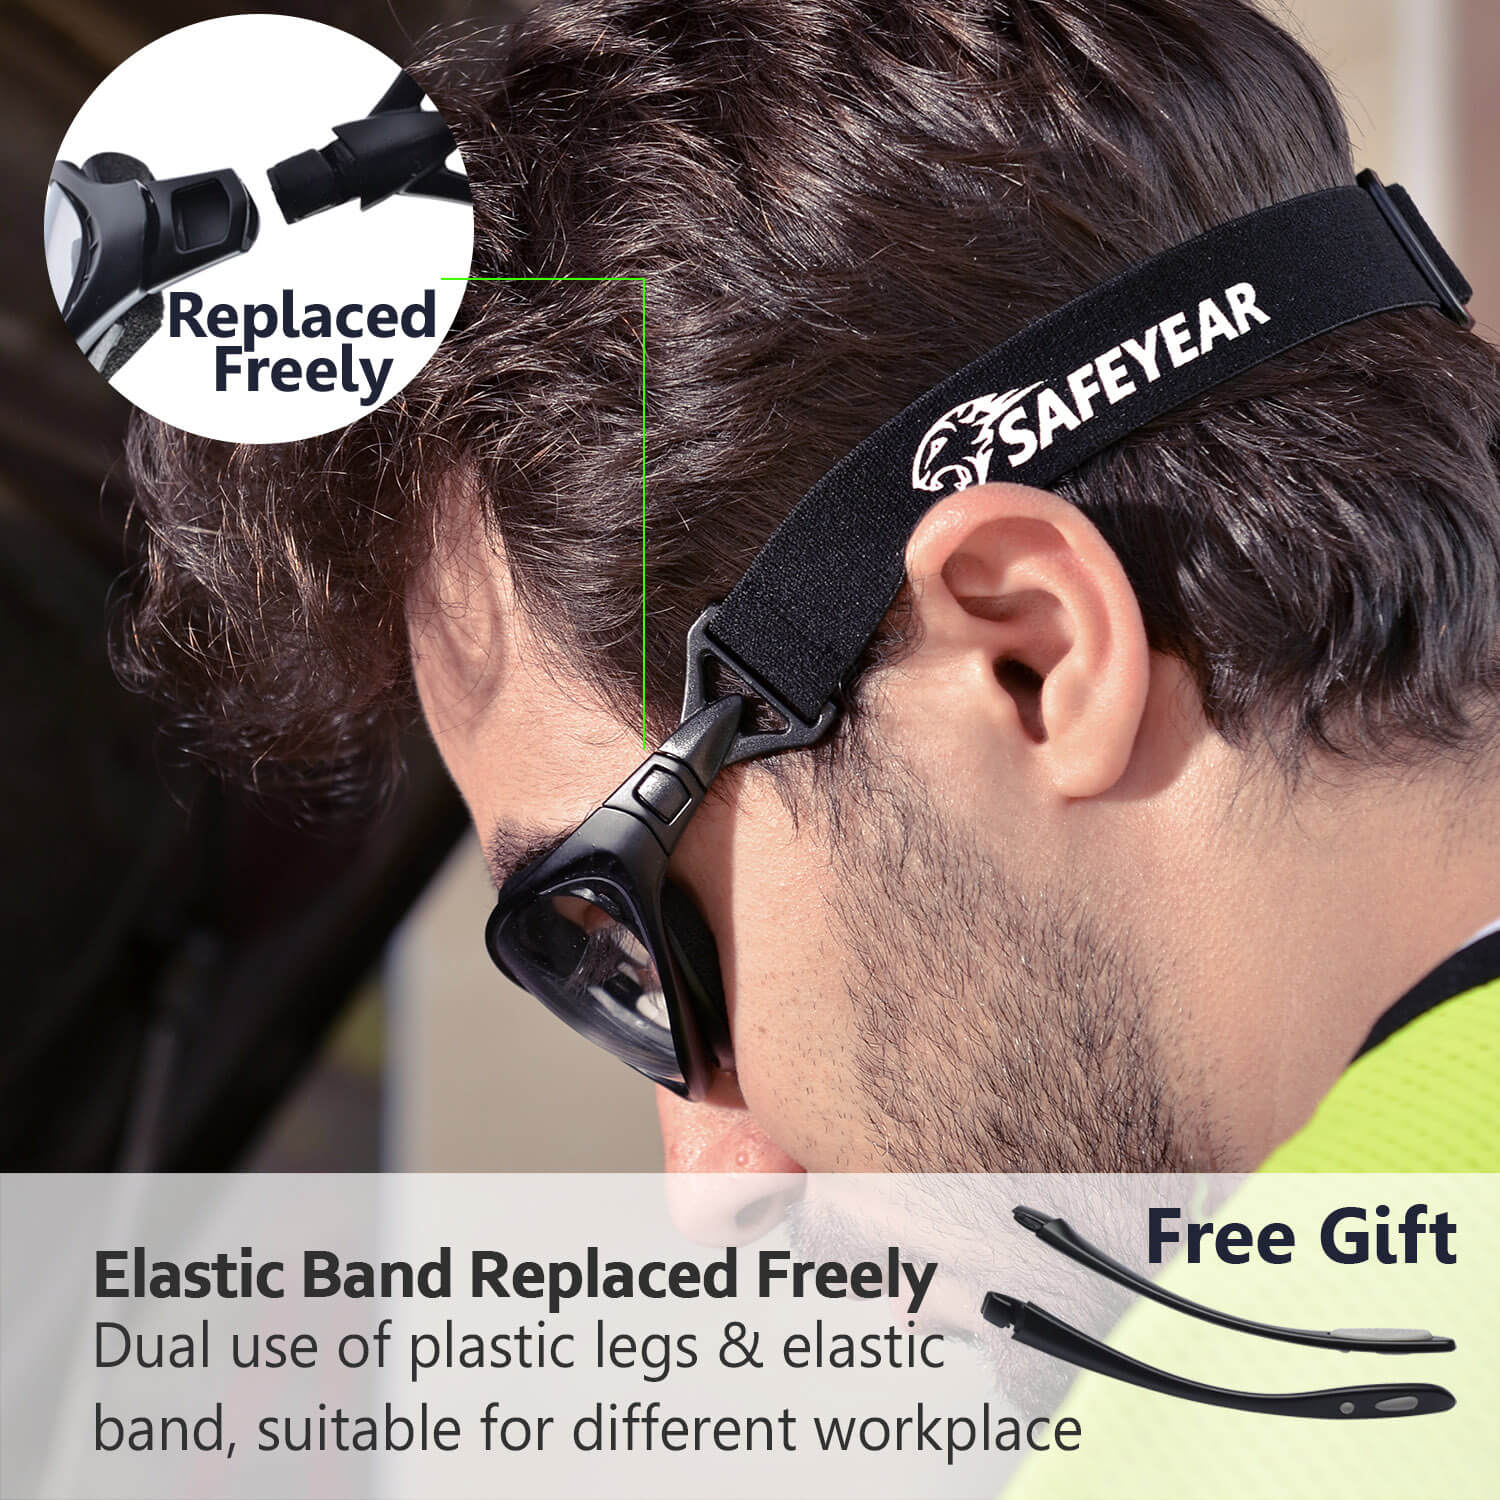 Safeyear Anti Fog Z87 Safety Glasses Goggles for Men & Women